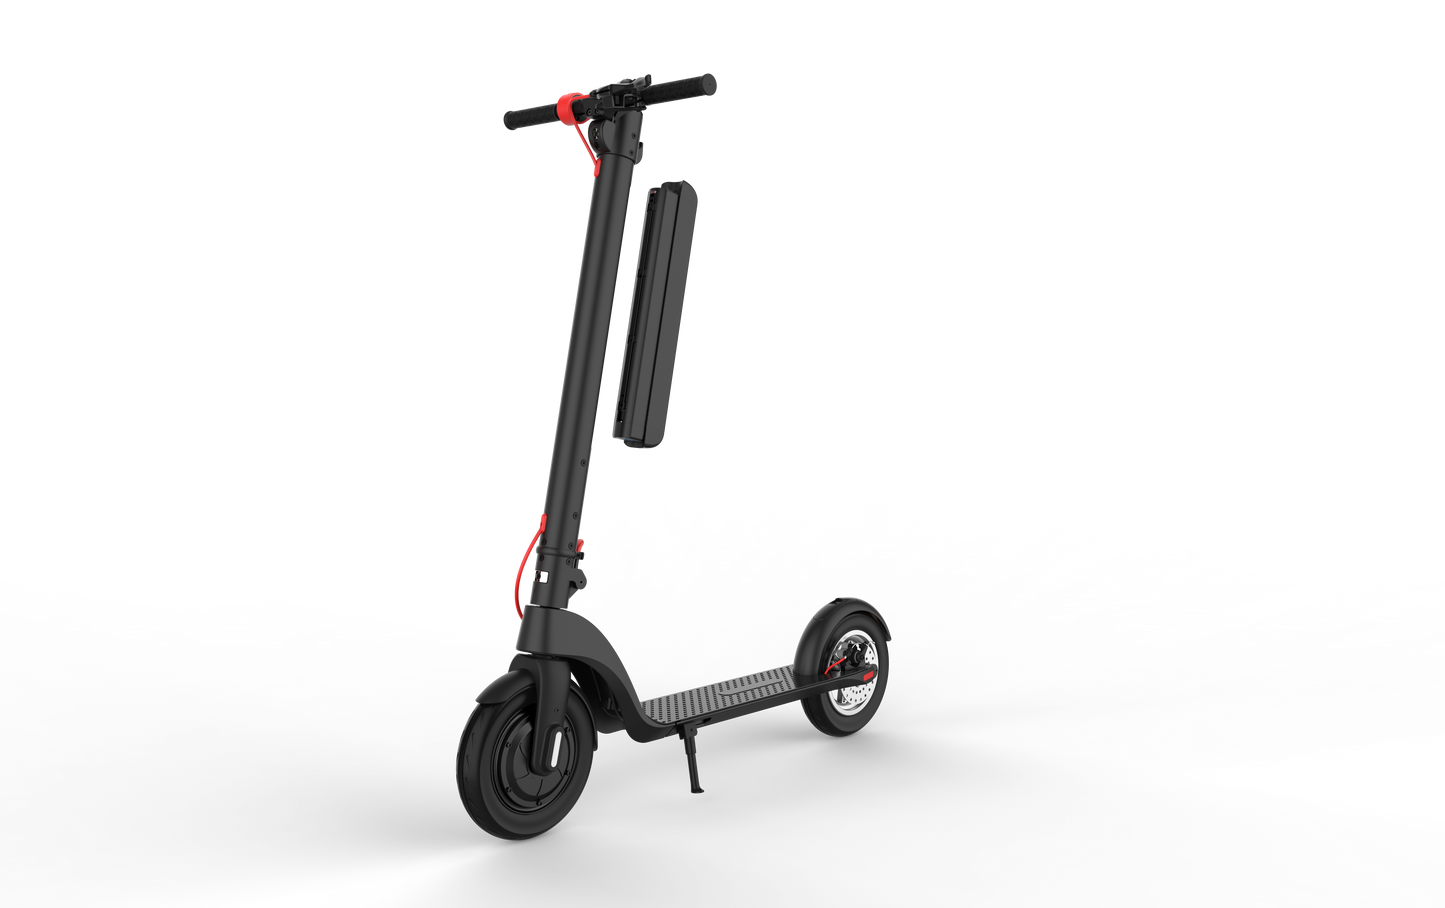 Electric scooter X8 Maximum Range 27.9mph